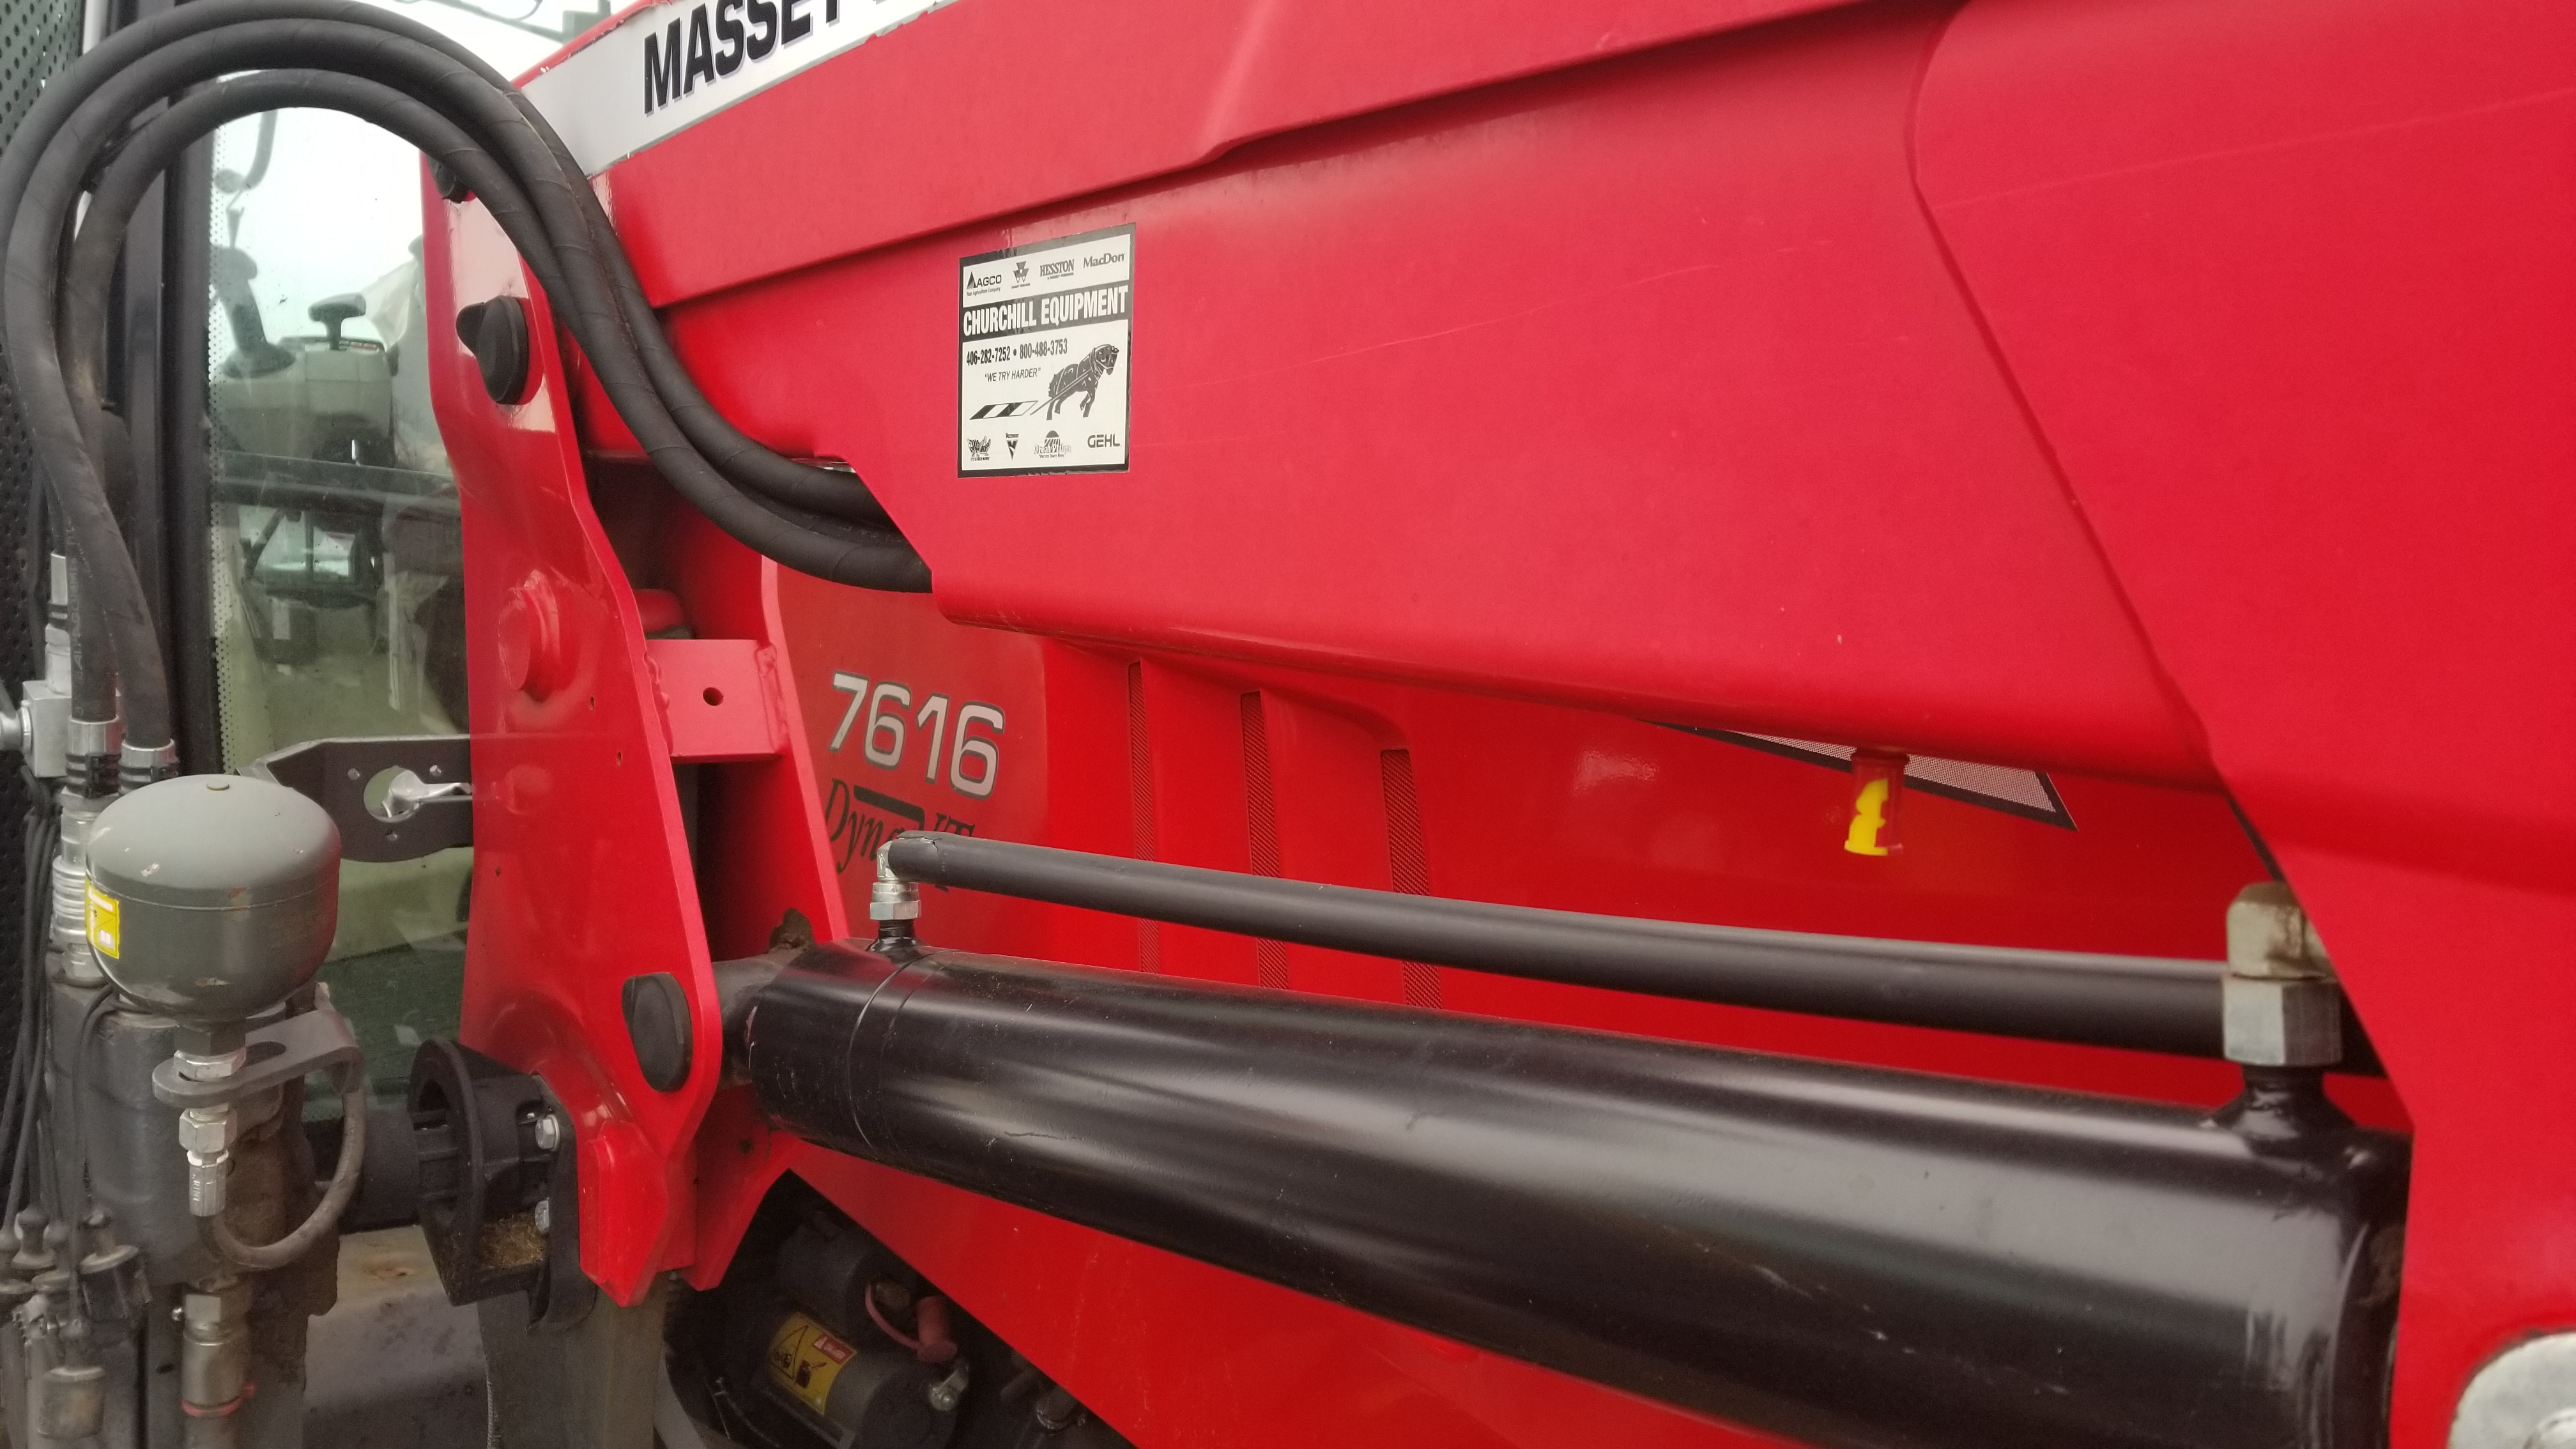 2014 Massey Ferguson 7616 Classic Tractor